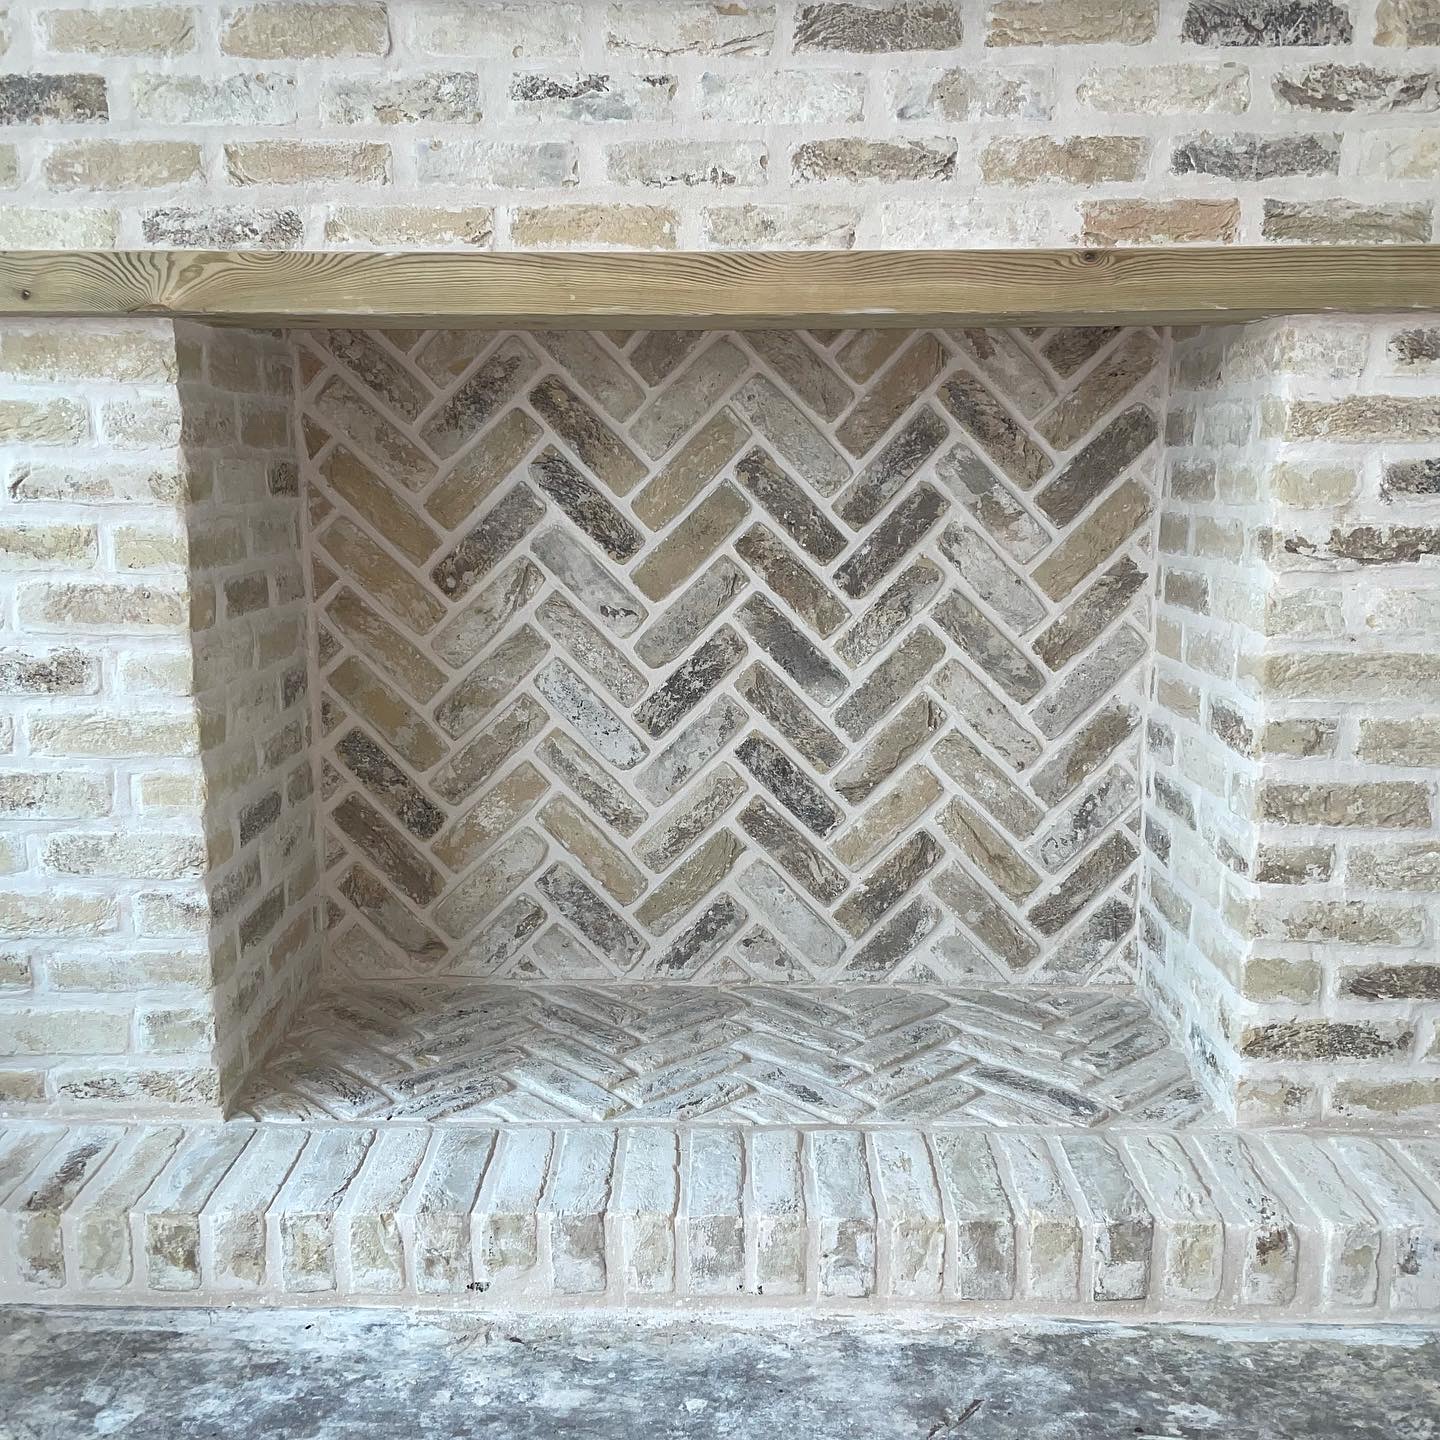 Reclaimed Brick Slips, Fireplace Chambers